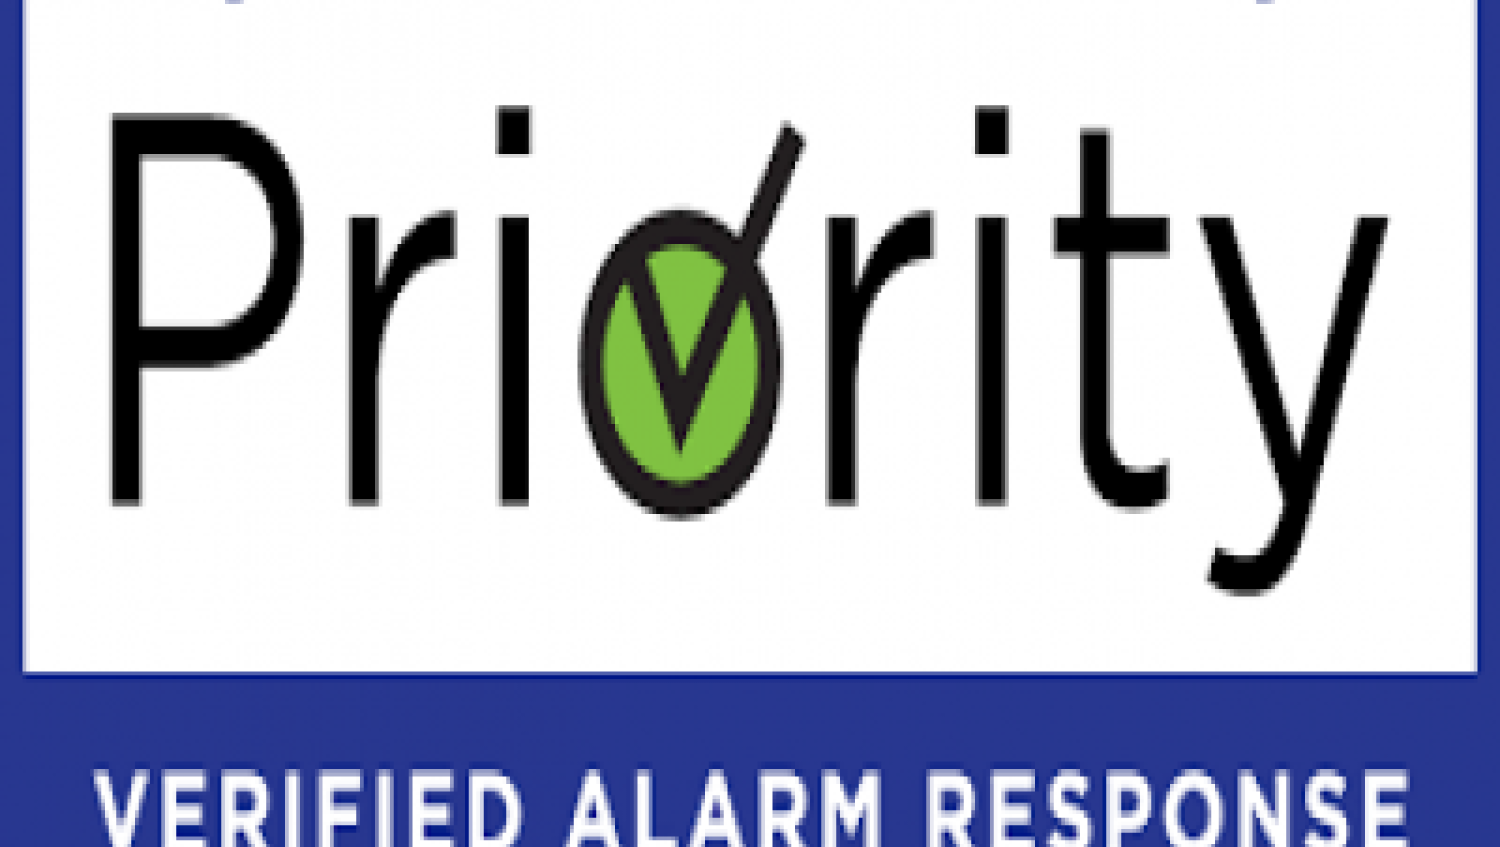 Partnership for Priority Verified Alarm Response logo